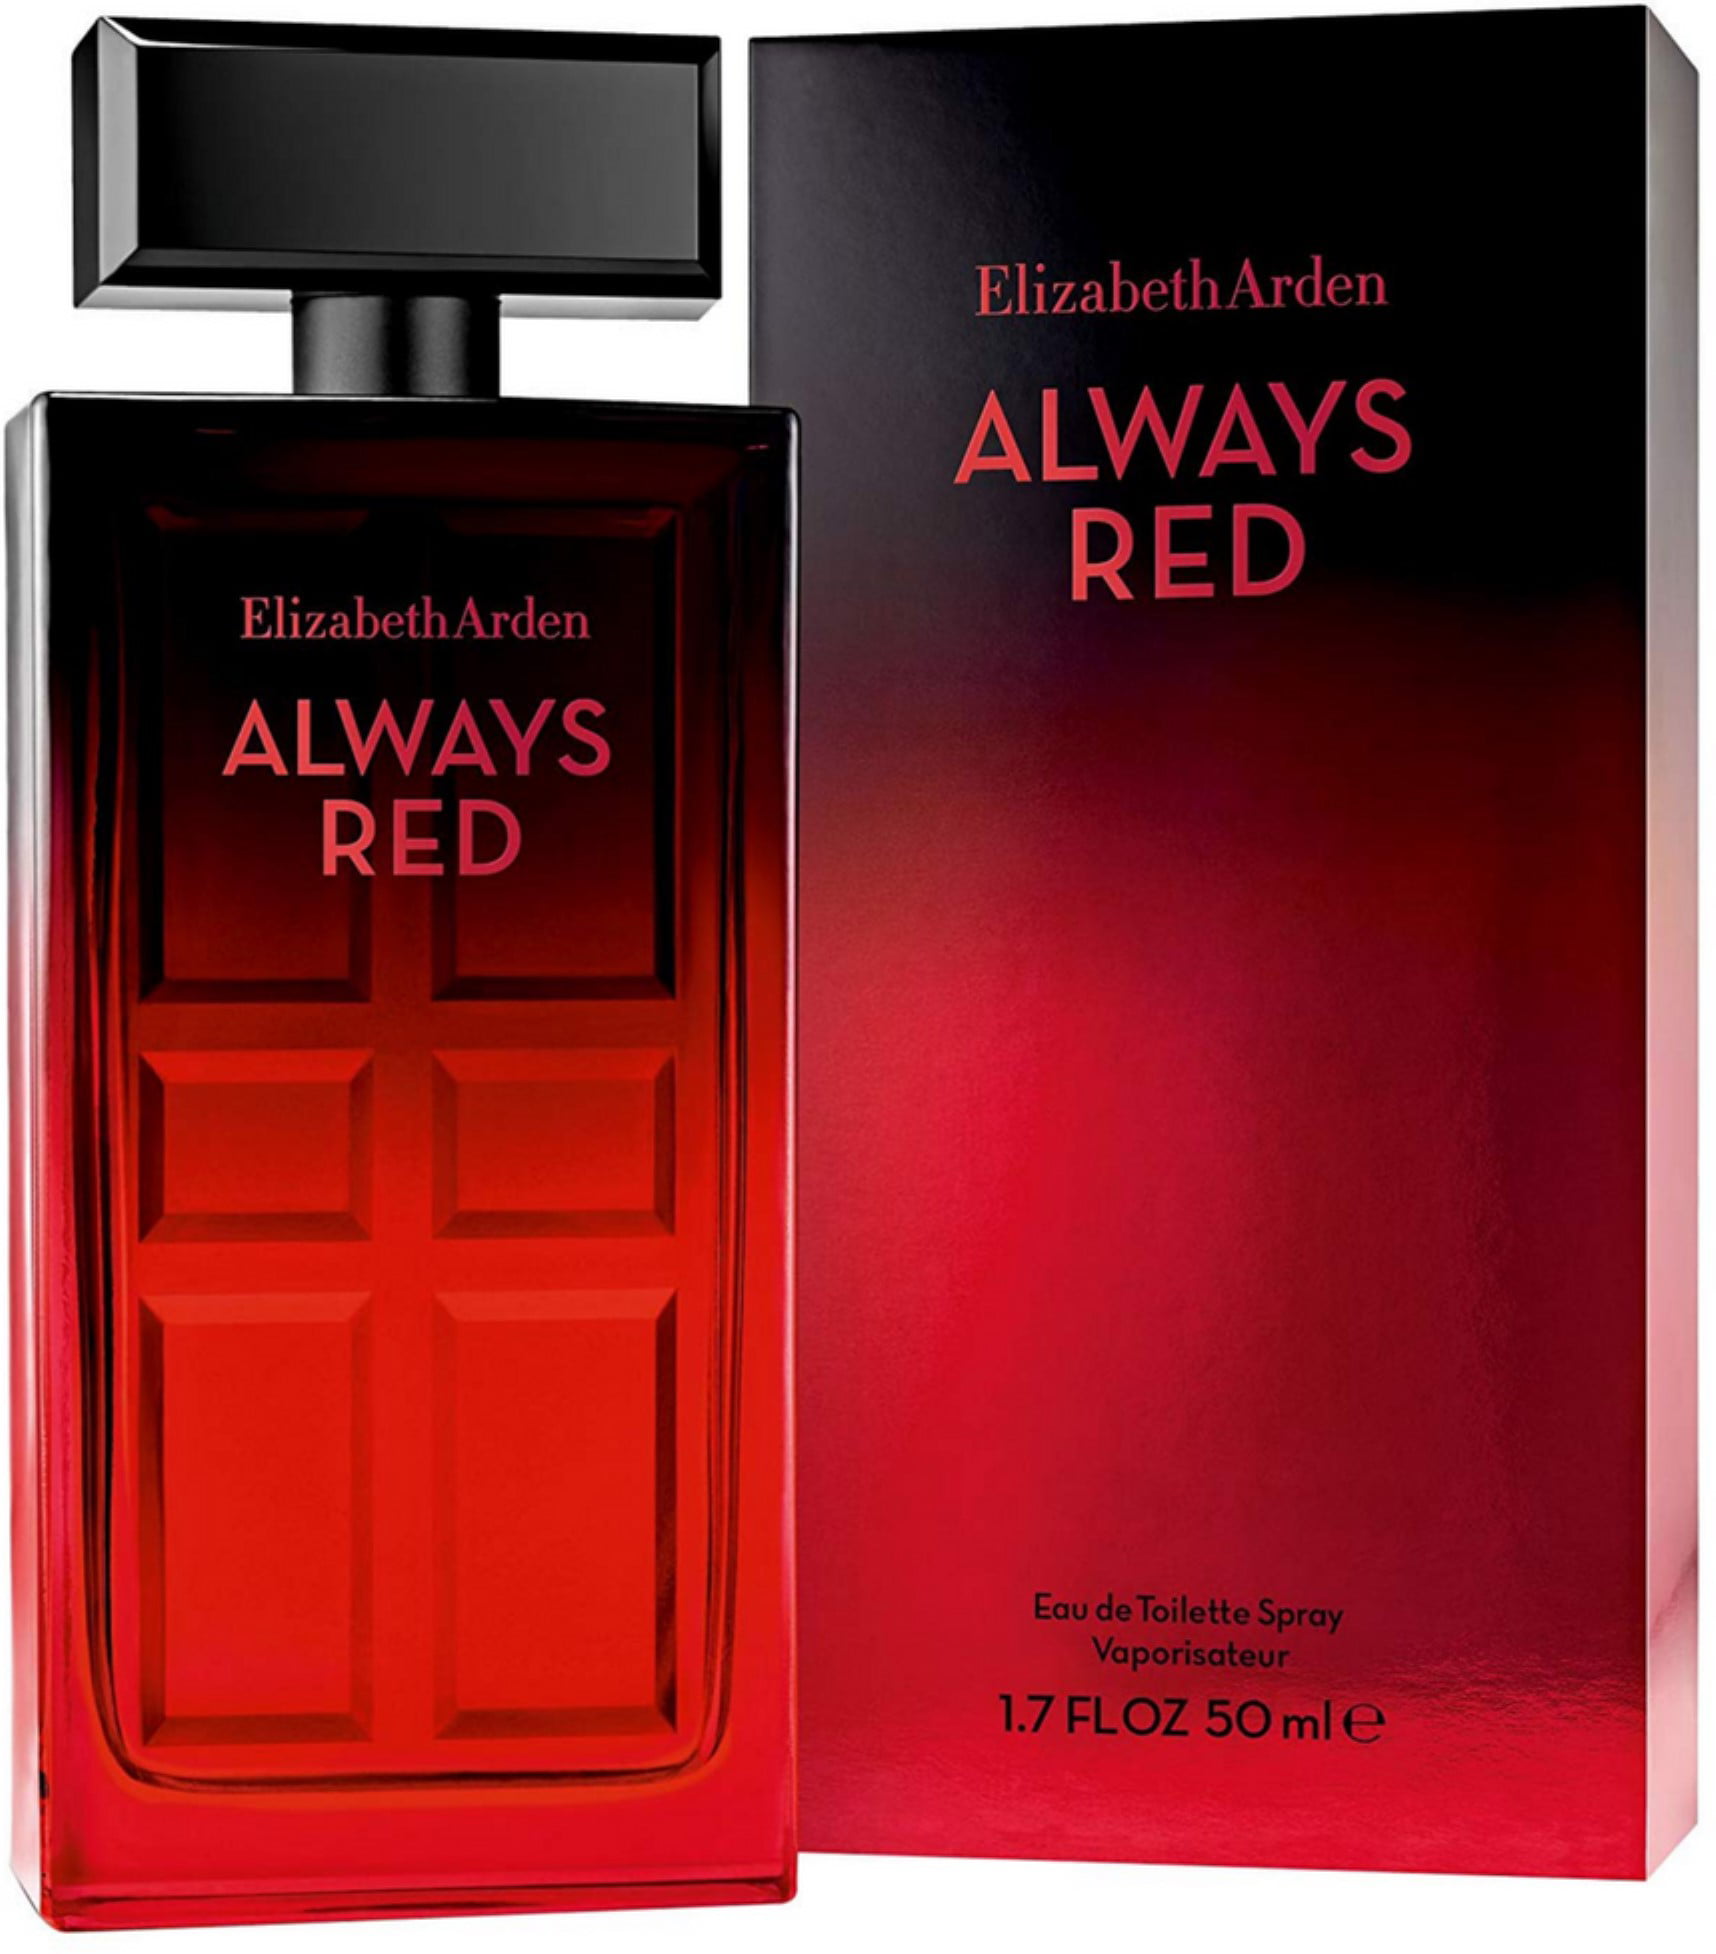 Arden Always Red Eau de Toilette Spray 1.7 oz - Walmart.com